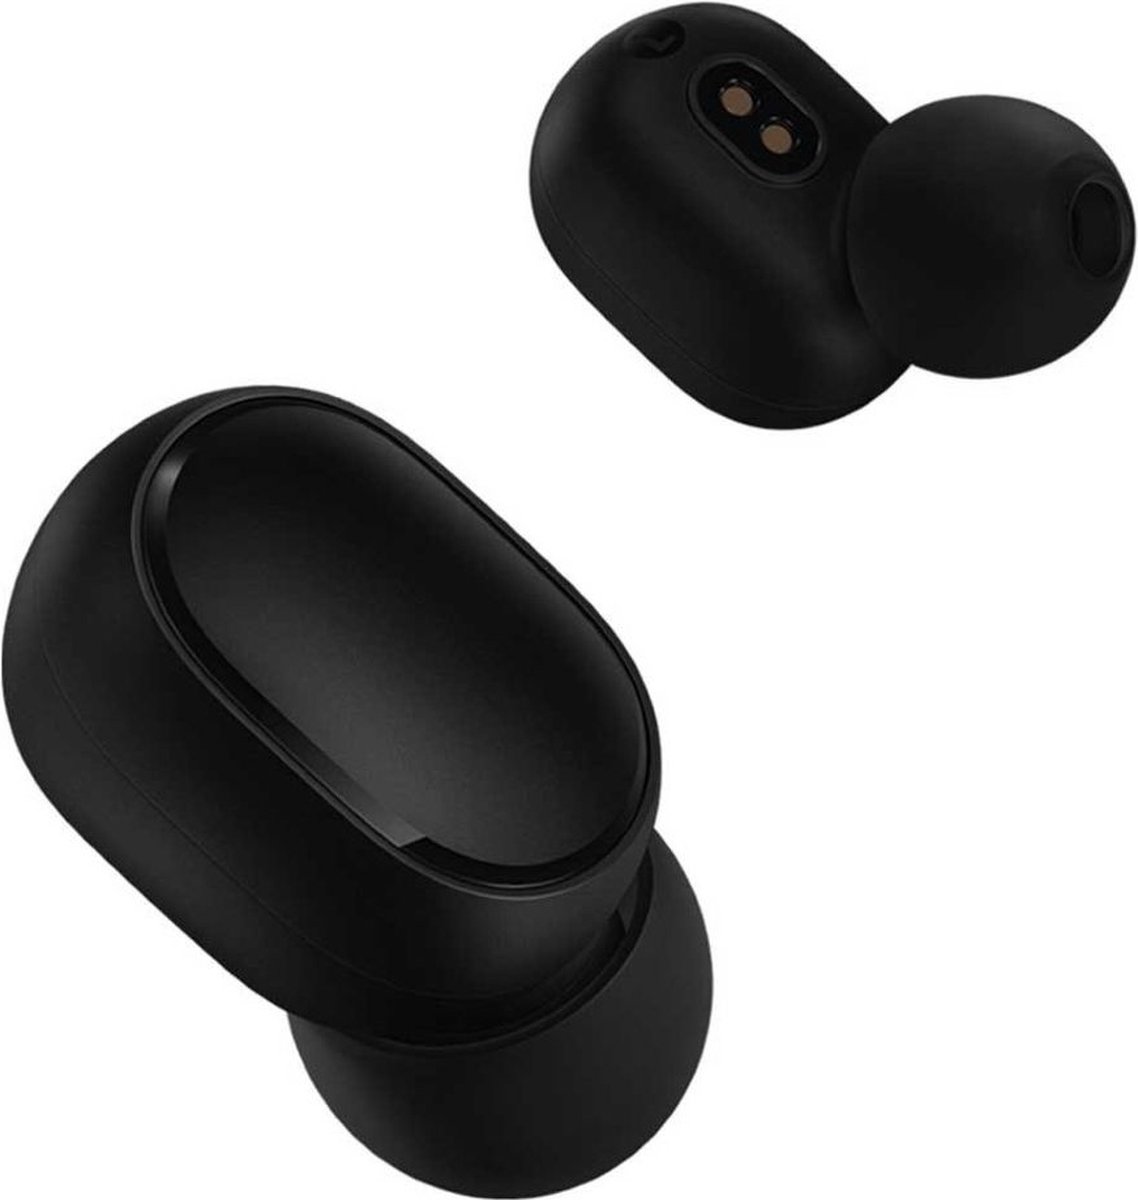 Redmi Airdots 2 Draadloze Earbuds Alternatief - Oordopjes - Wireless - Draadloos - Muziek